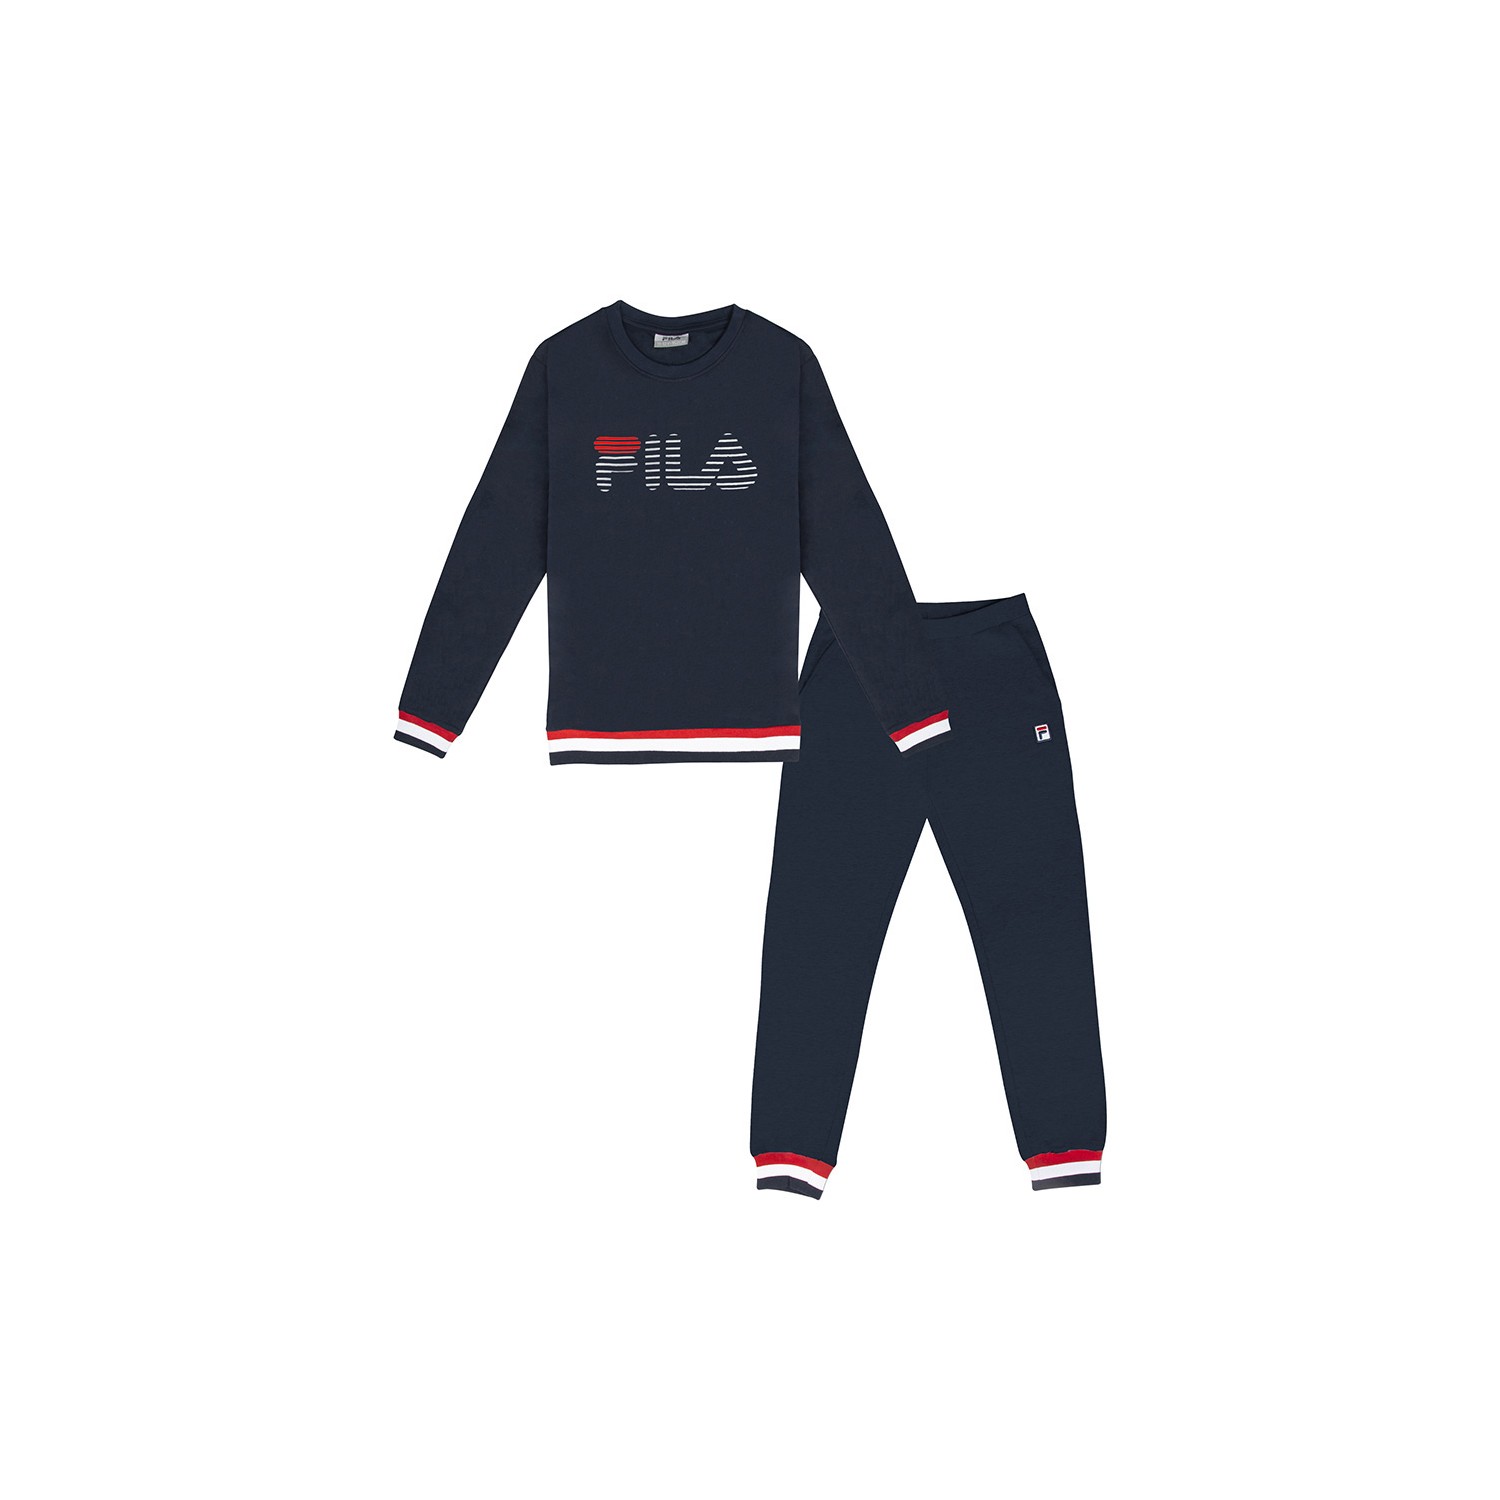 Pyjama Junior Coton FILA